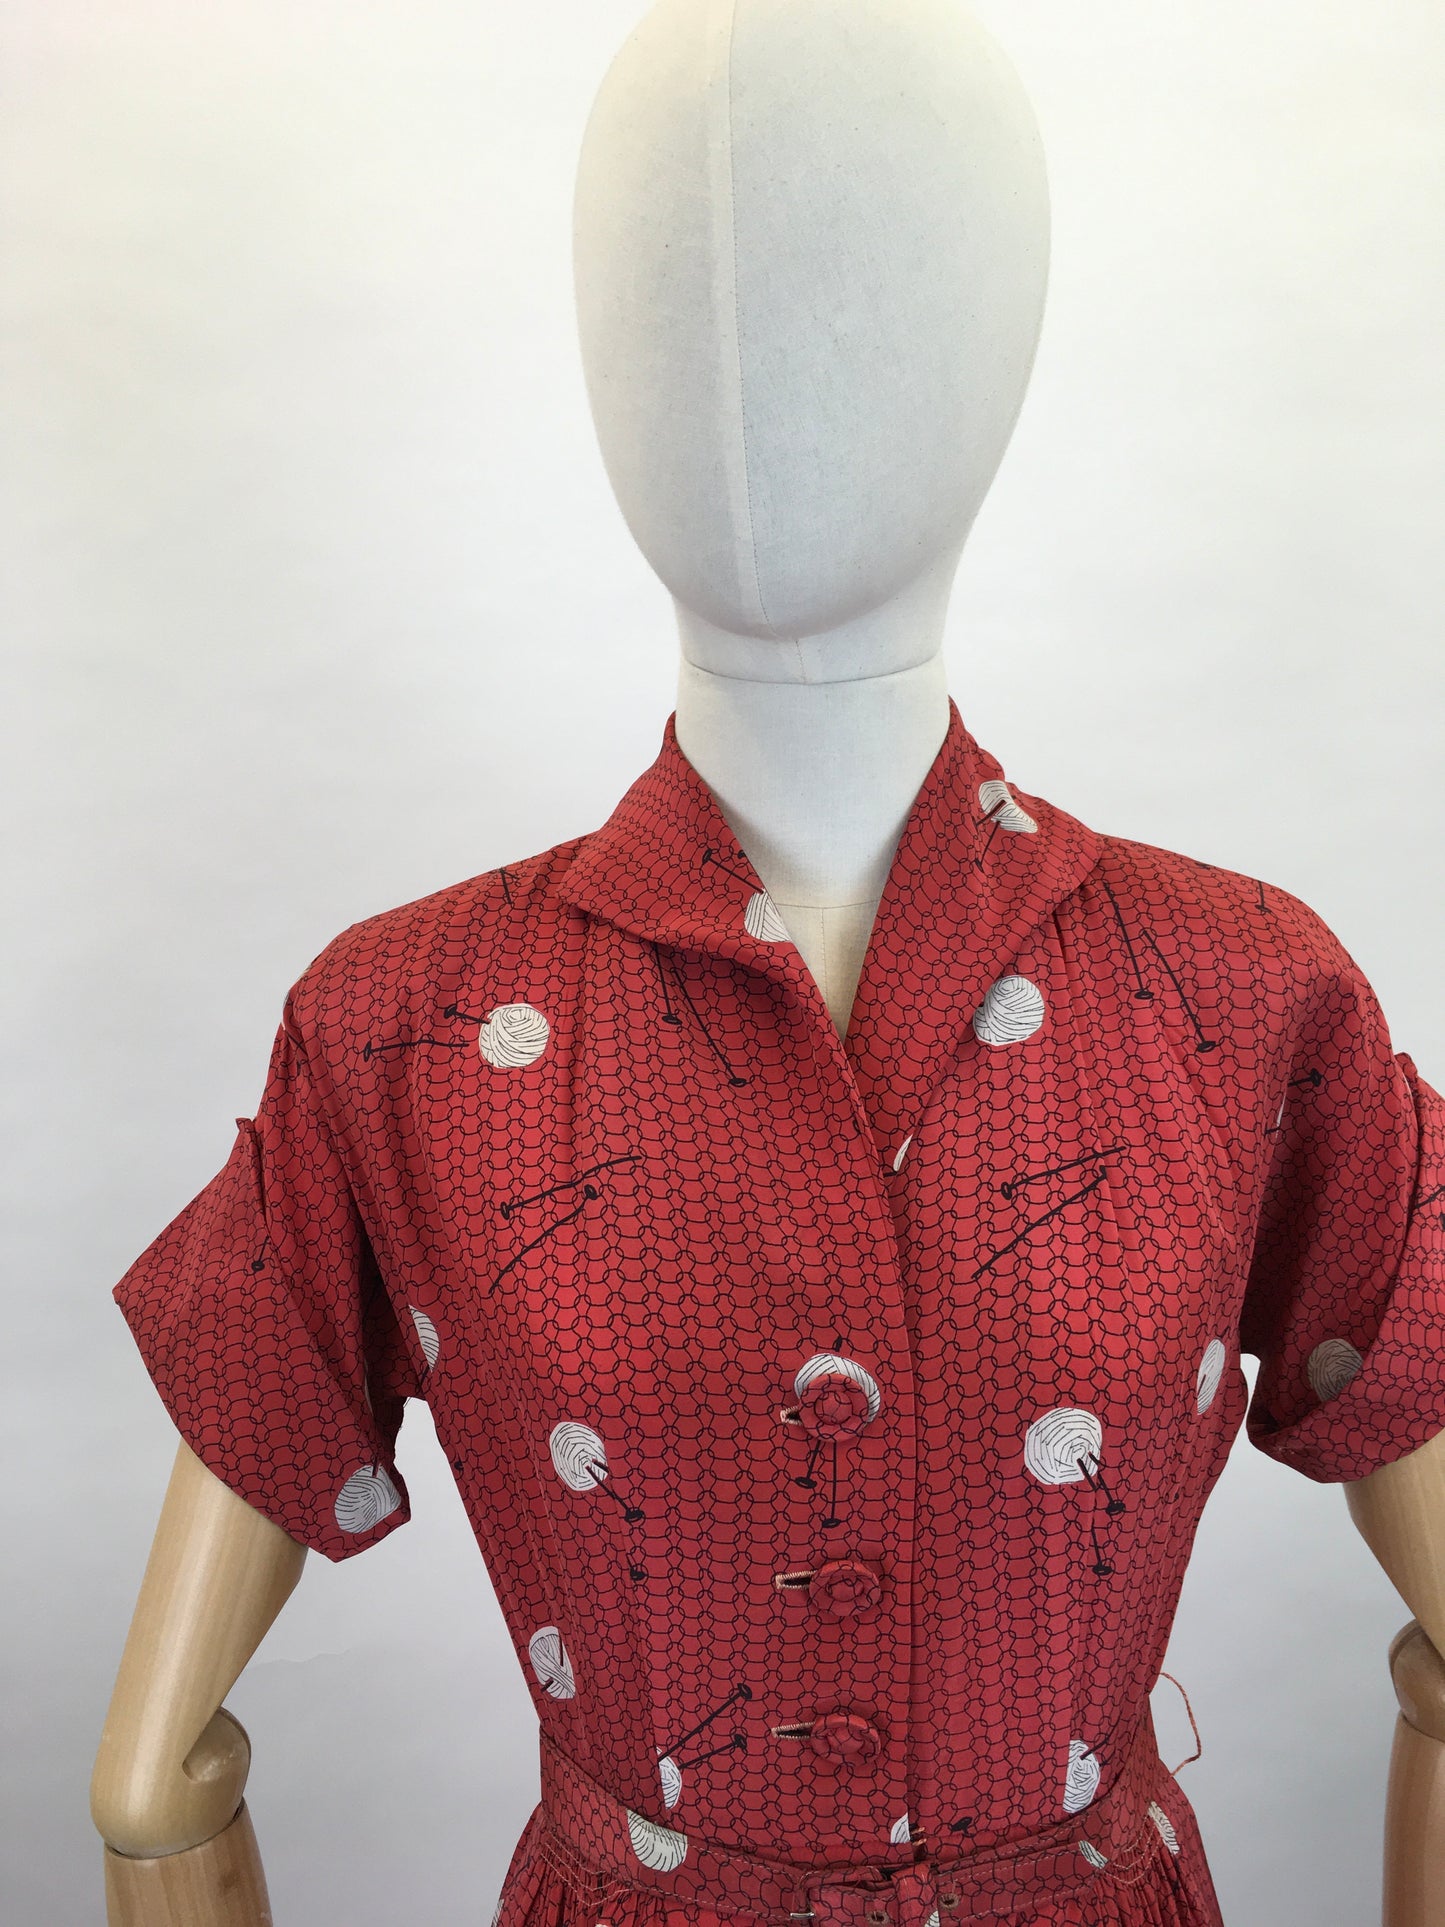 Original 1940’s ‘ Leslie Fay’ Novelty Print Rayon Dress - In a STUNNING knitting Needle and Yarn Print